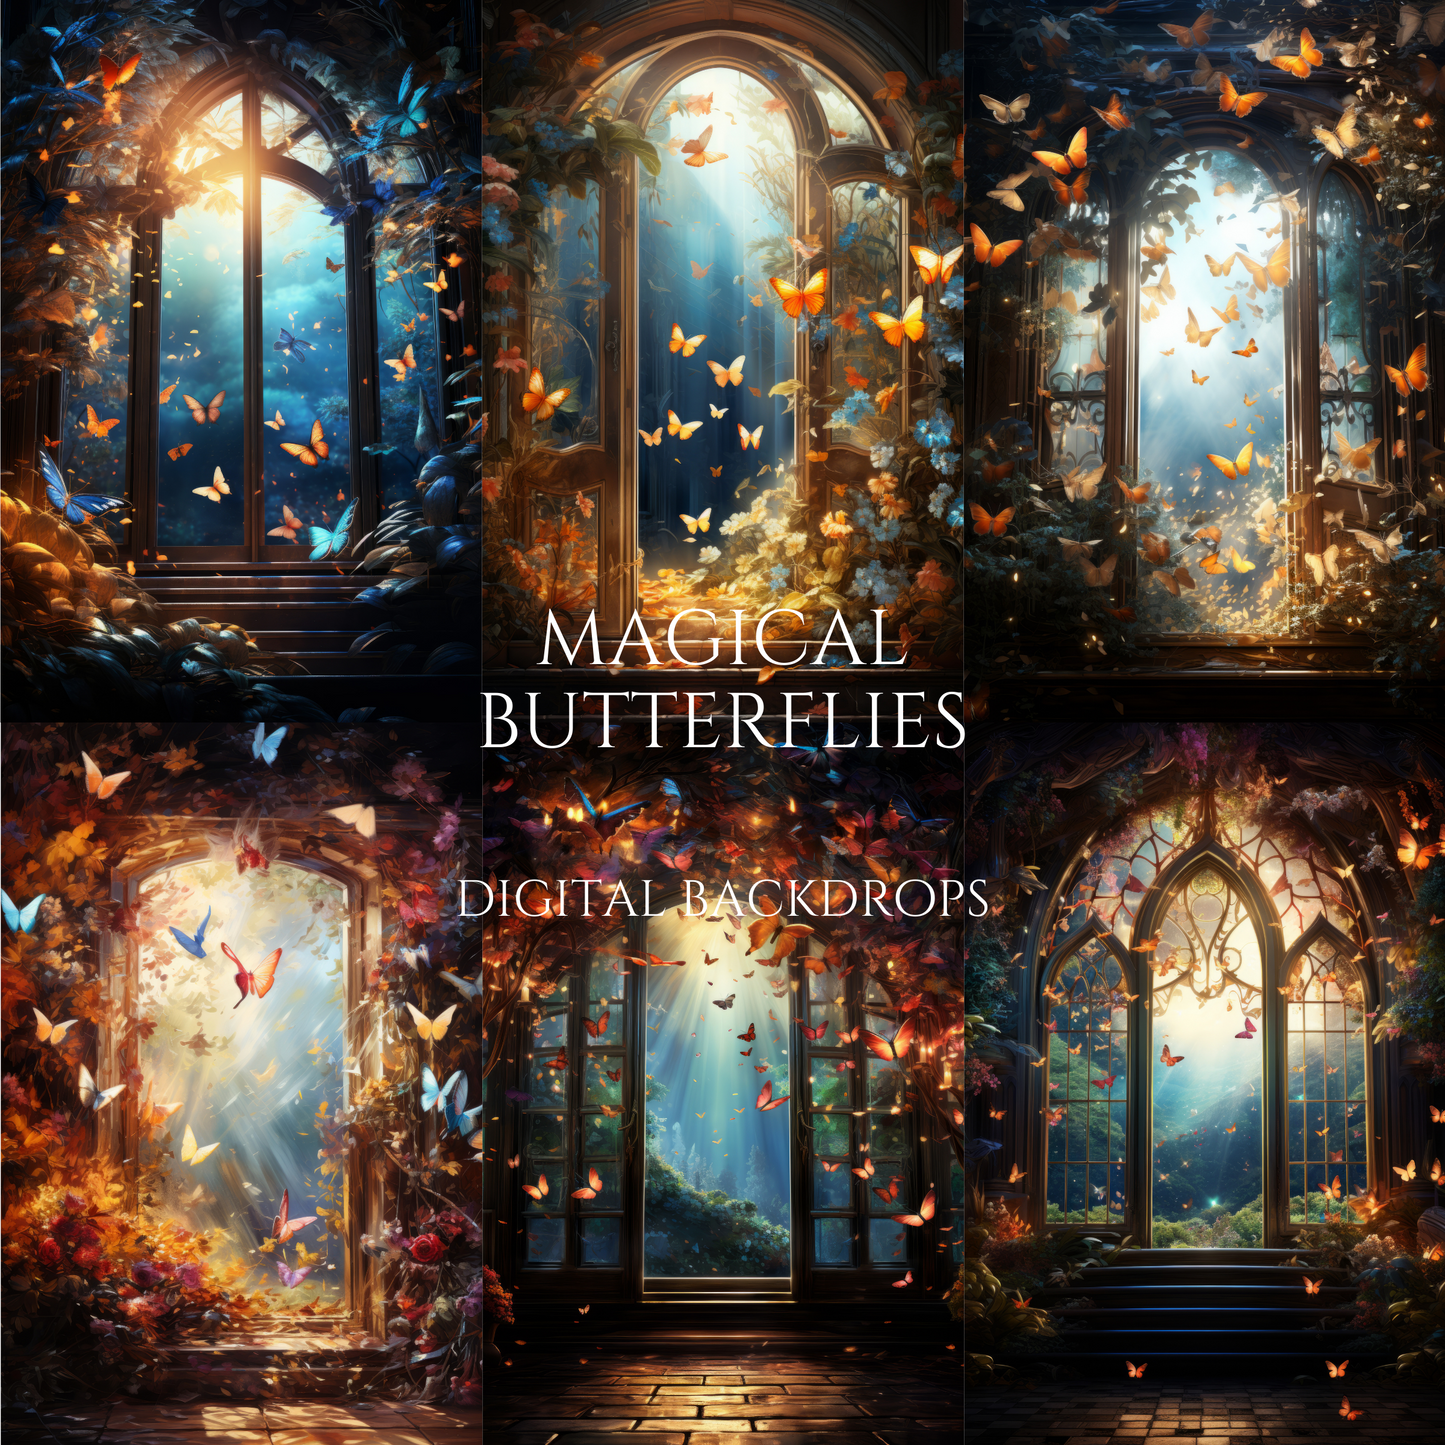 Magical Butterflies Digital Backdrops